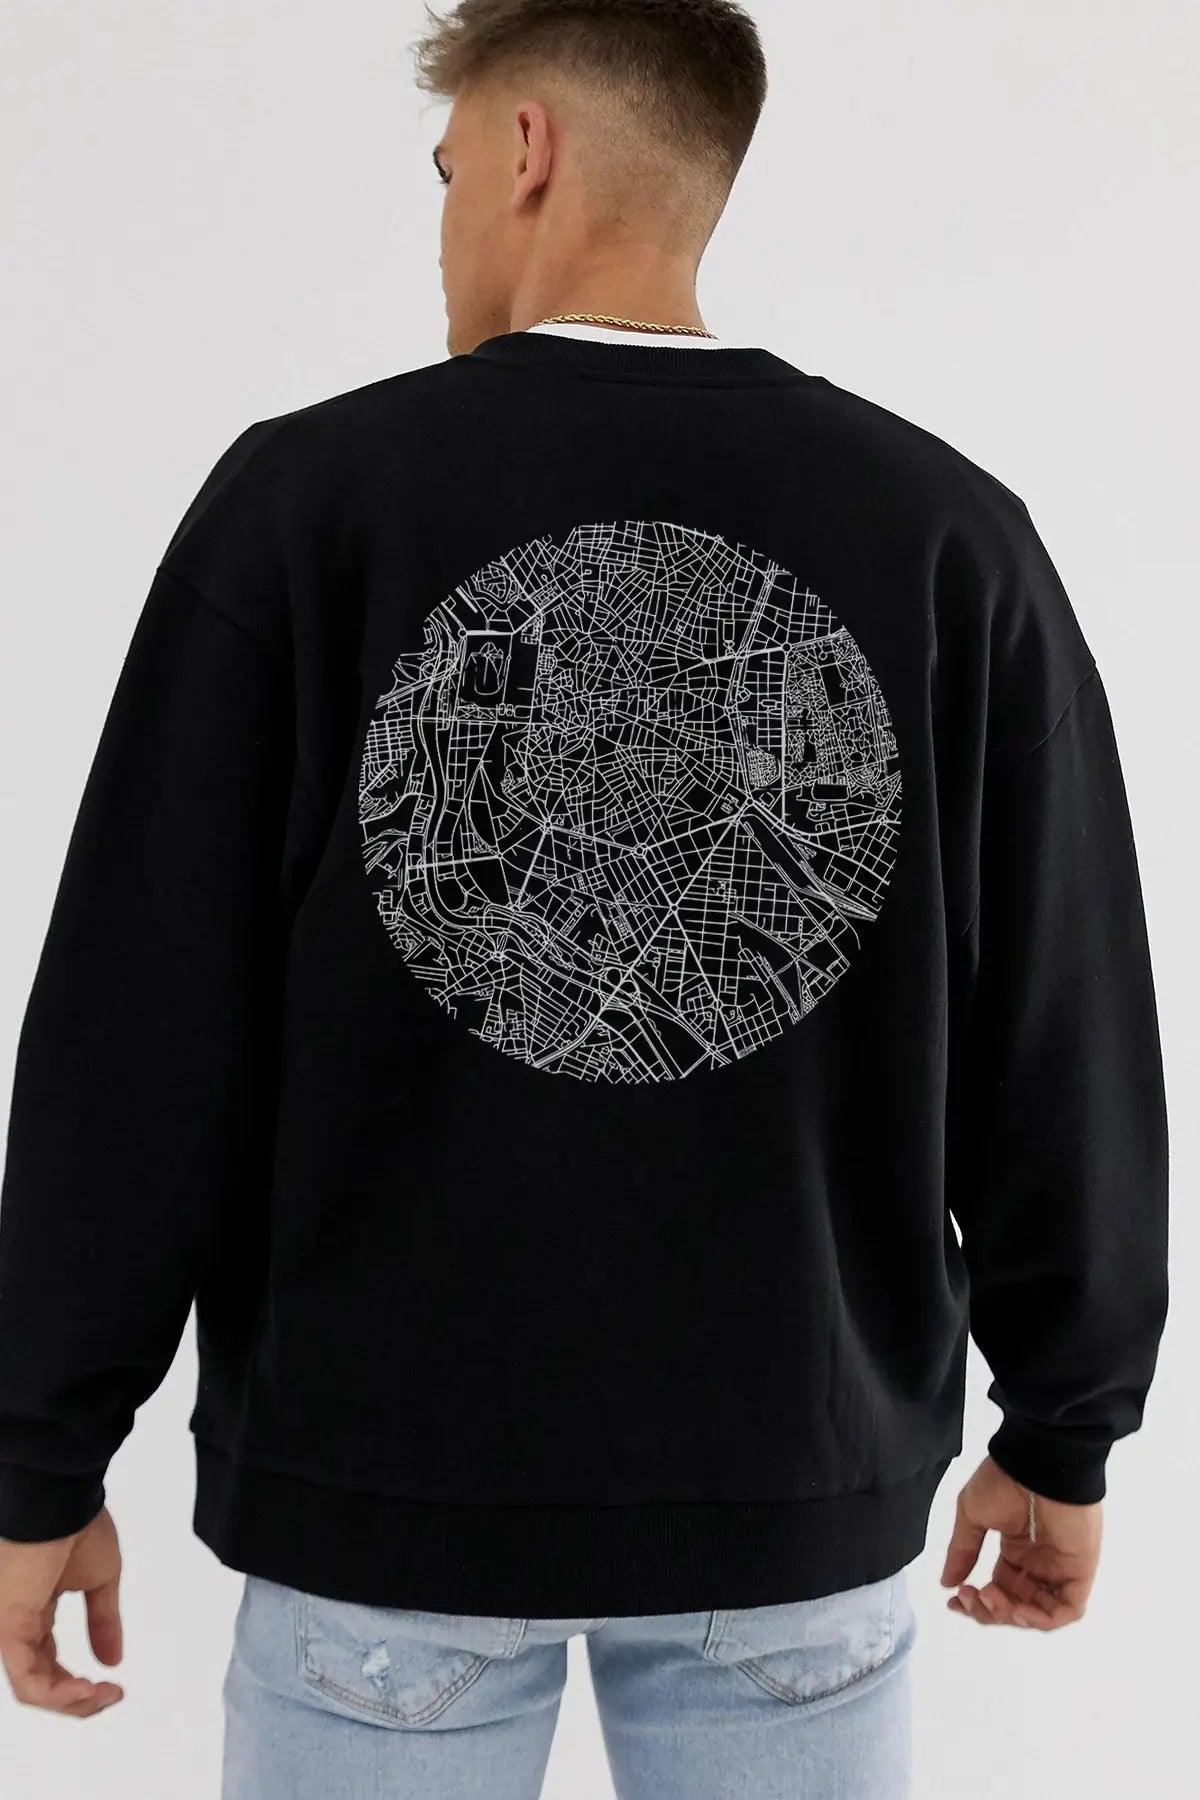 Madrid City Oversize Erkek Sweatshirt - PΛSΛGE